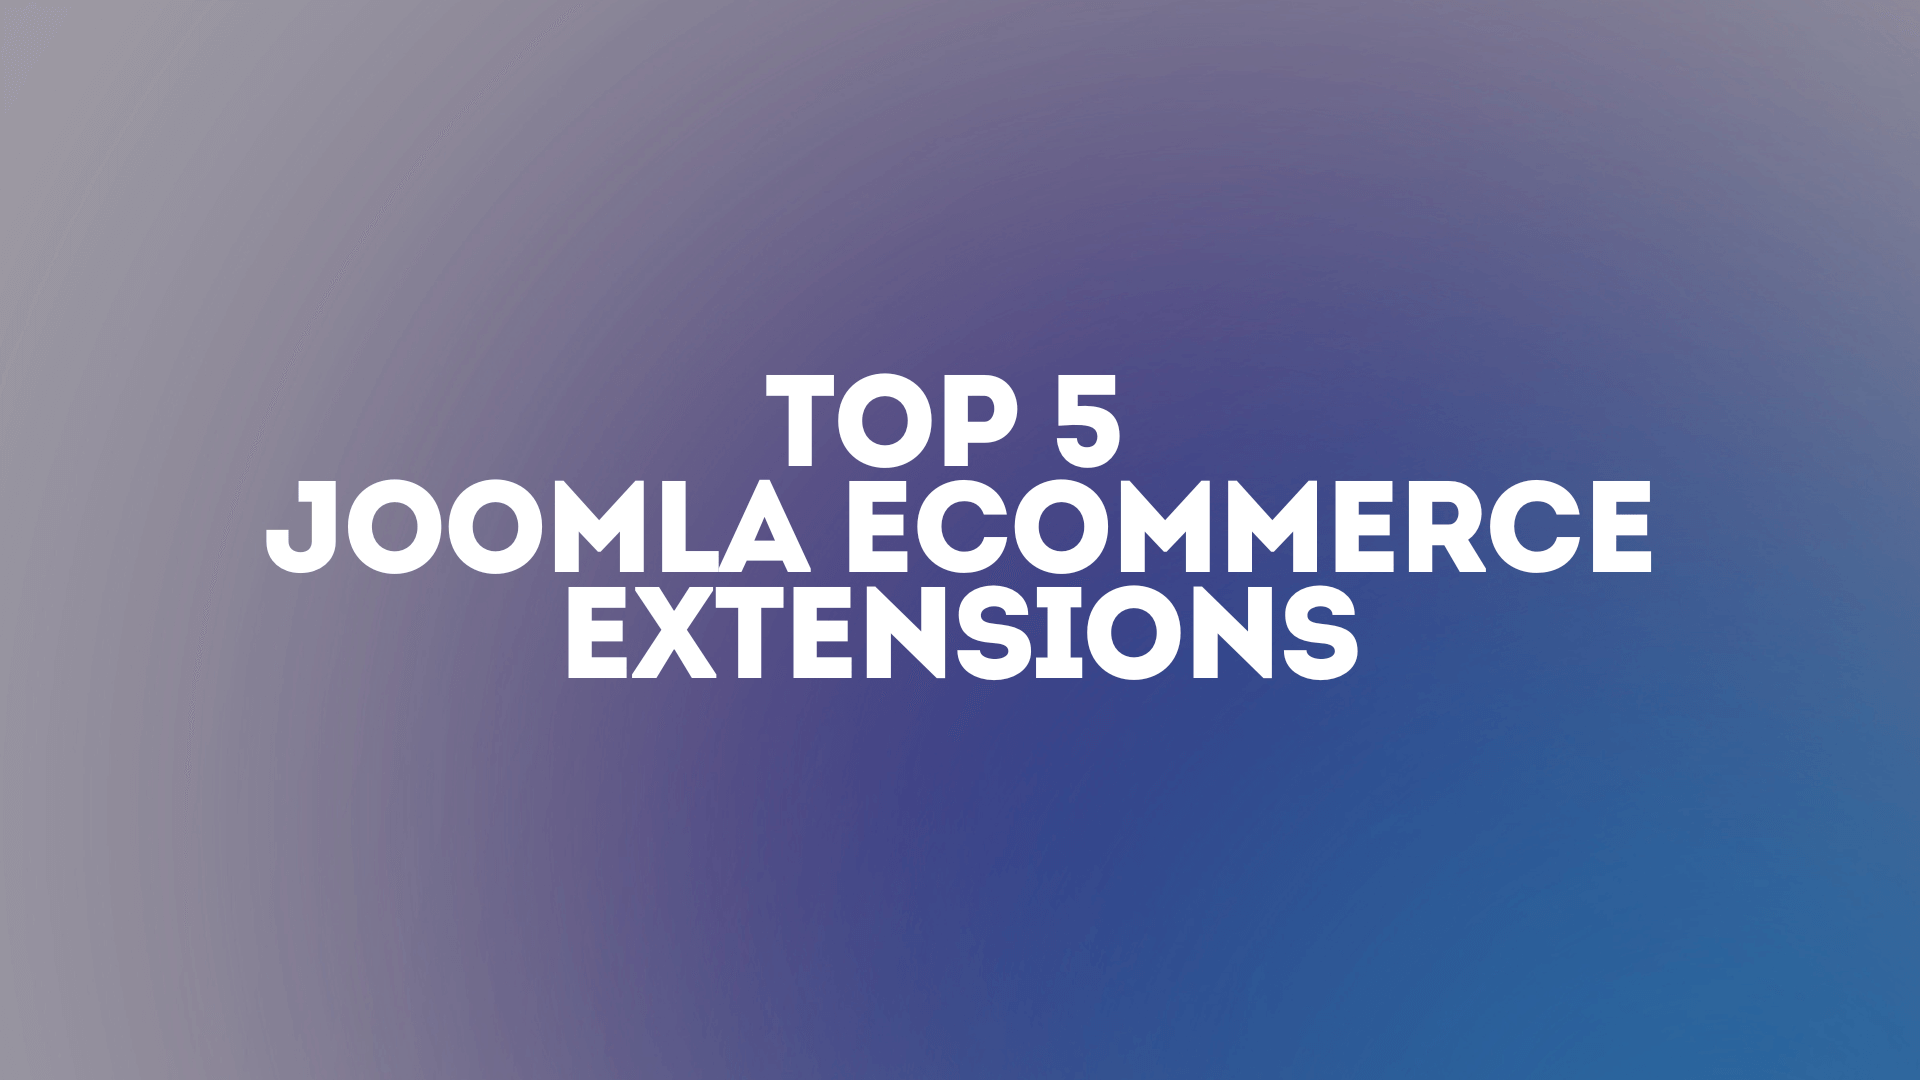 ordasoft Joomla News: Top 5 eCommerce Extensions for Joomla